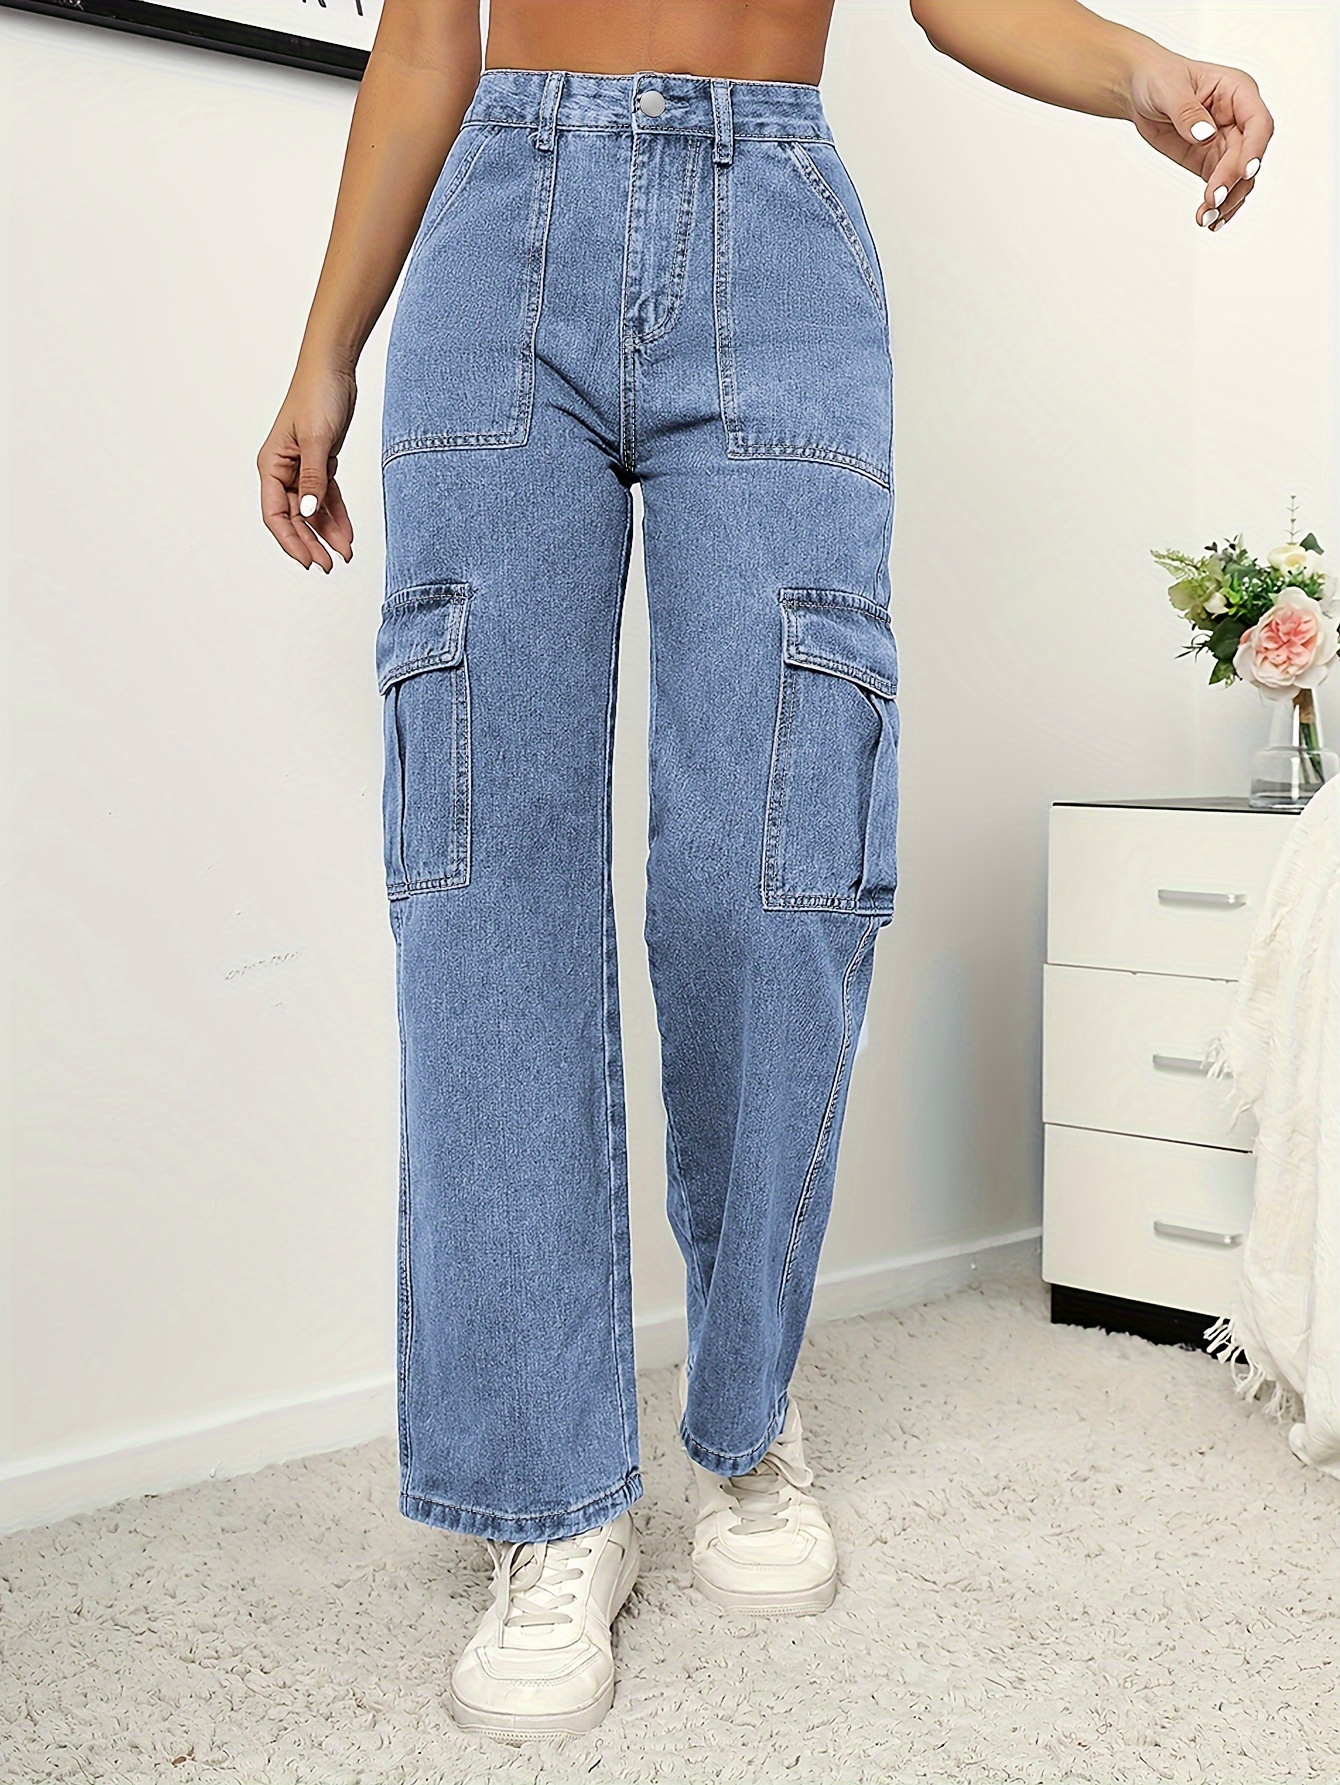 Bangkok Women‘s High Waist Plus size Denim Jeans Big Size Stretchy Pants  Maong 2 Buttons size30-40